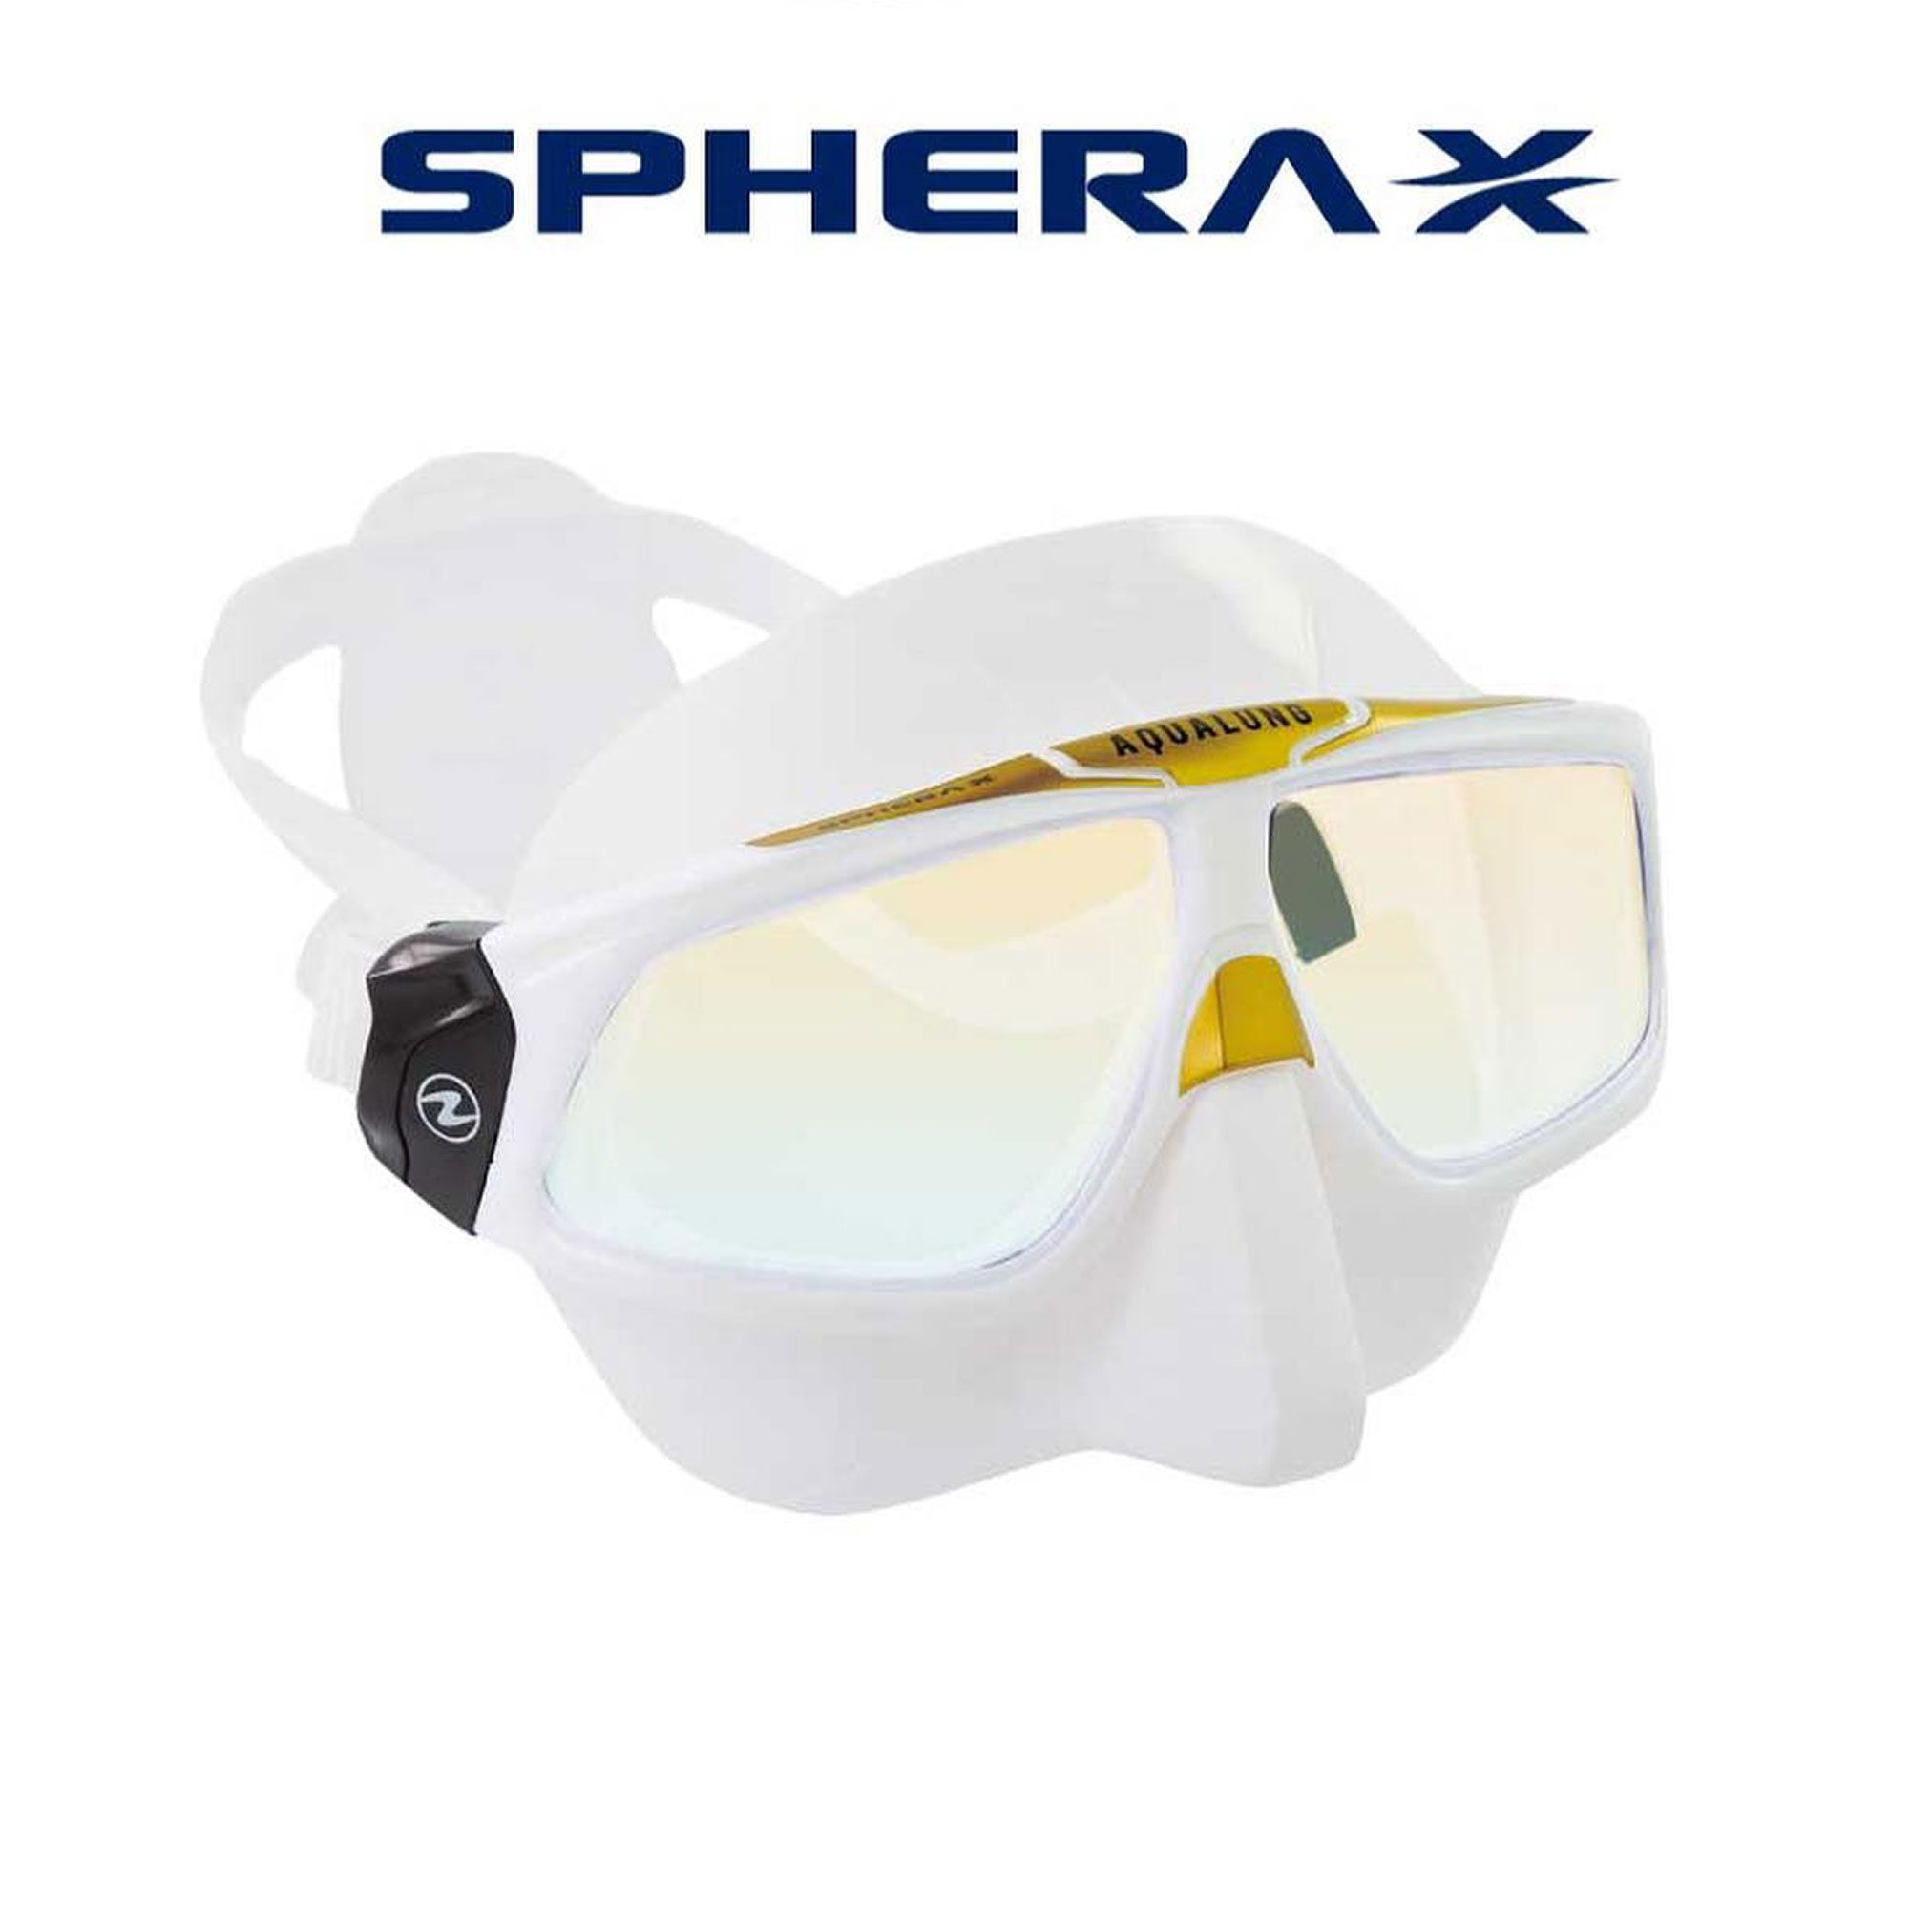 Aqualung Sphera X Mask White/Gold Mirror Lens